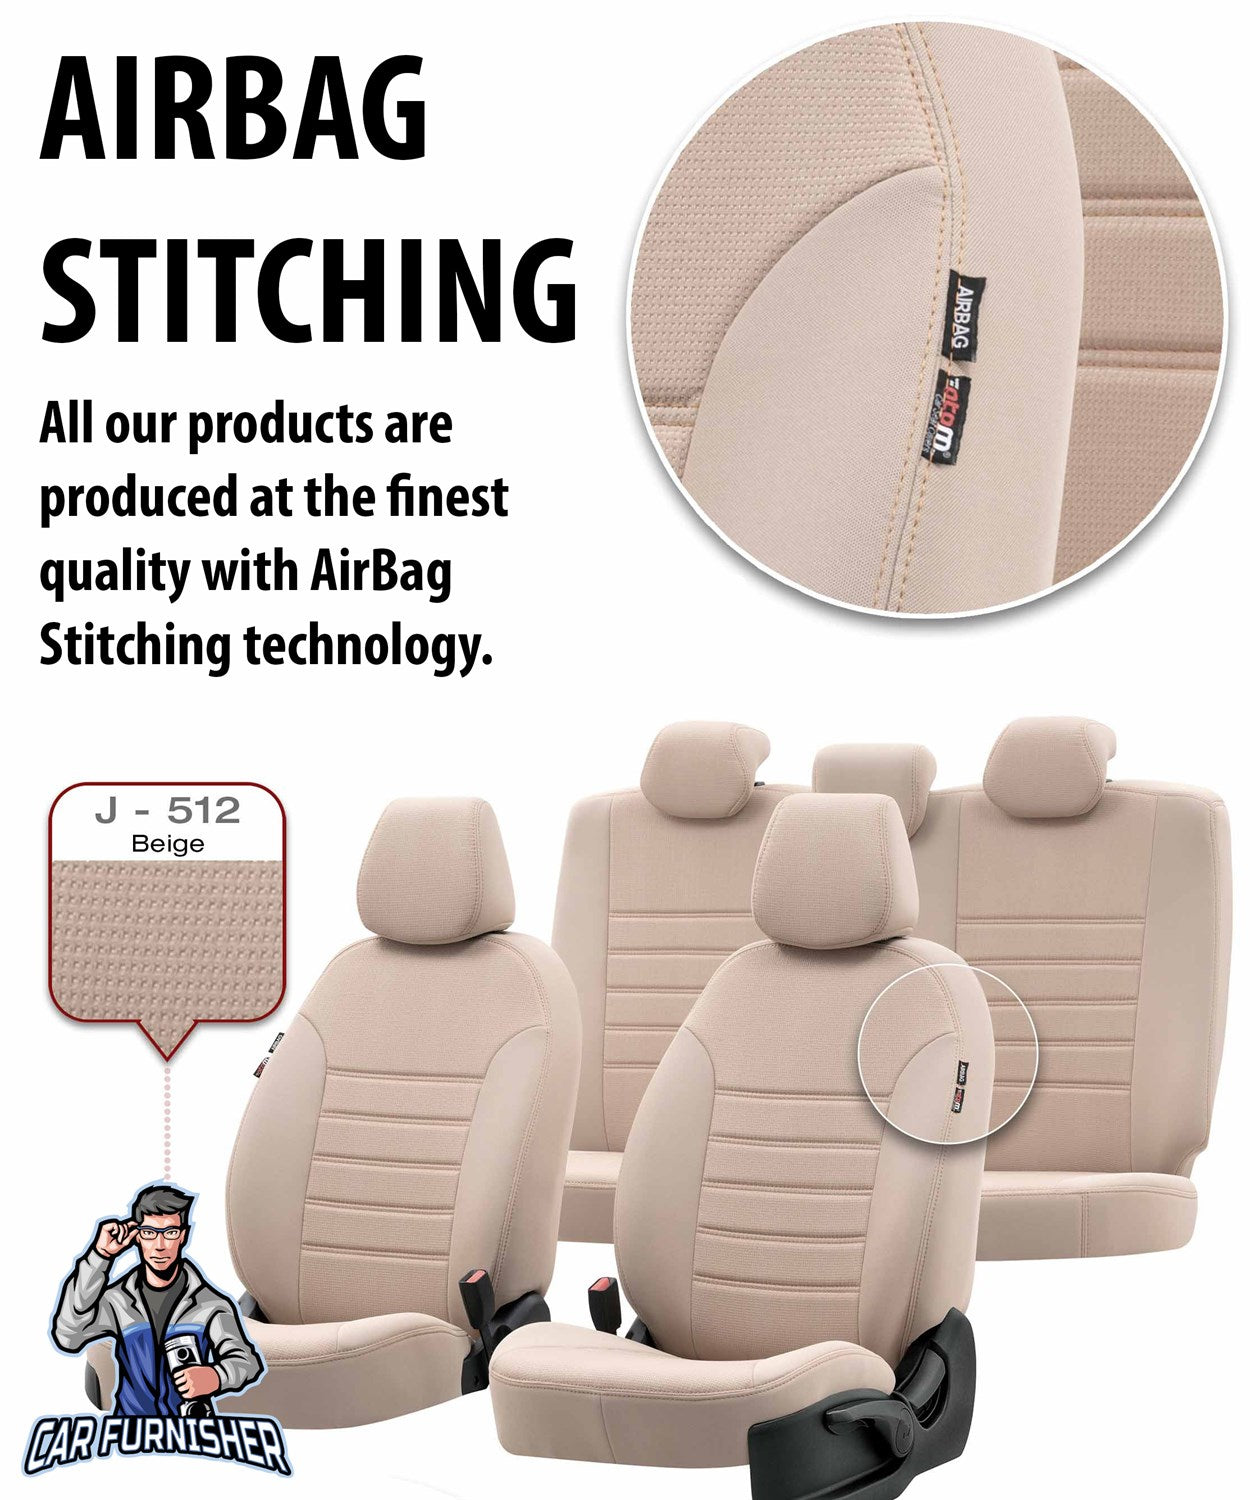 Ford Transit Seat Covers Original Jacquard Design Smoked Jacquard Fabric